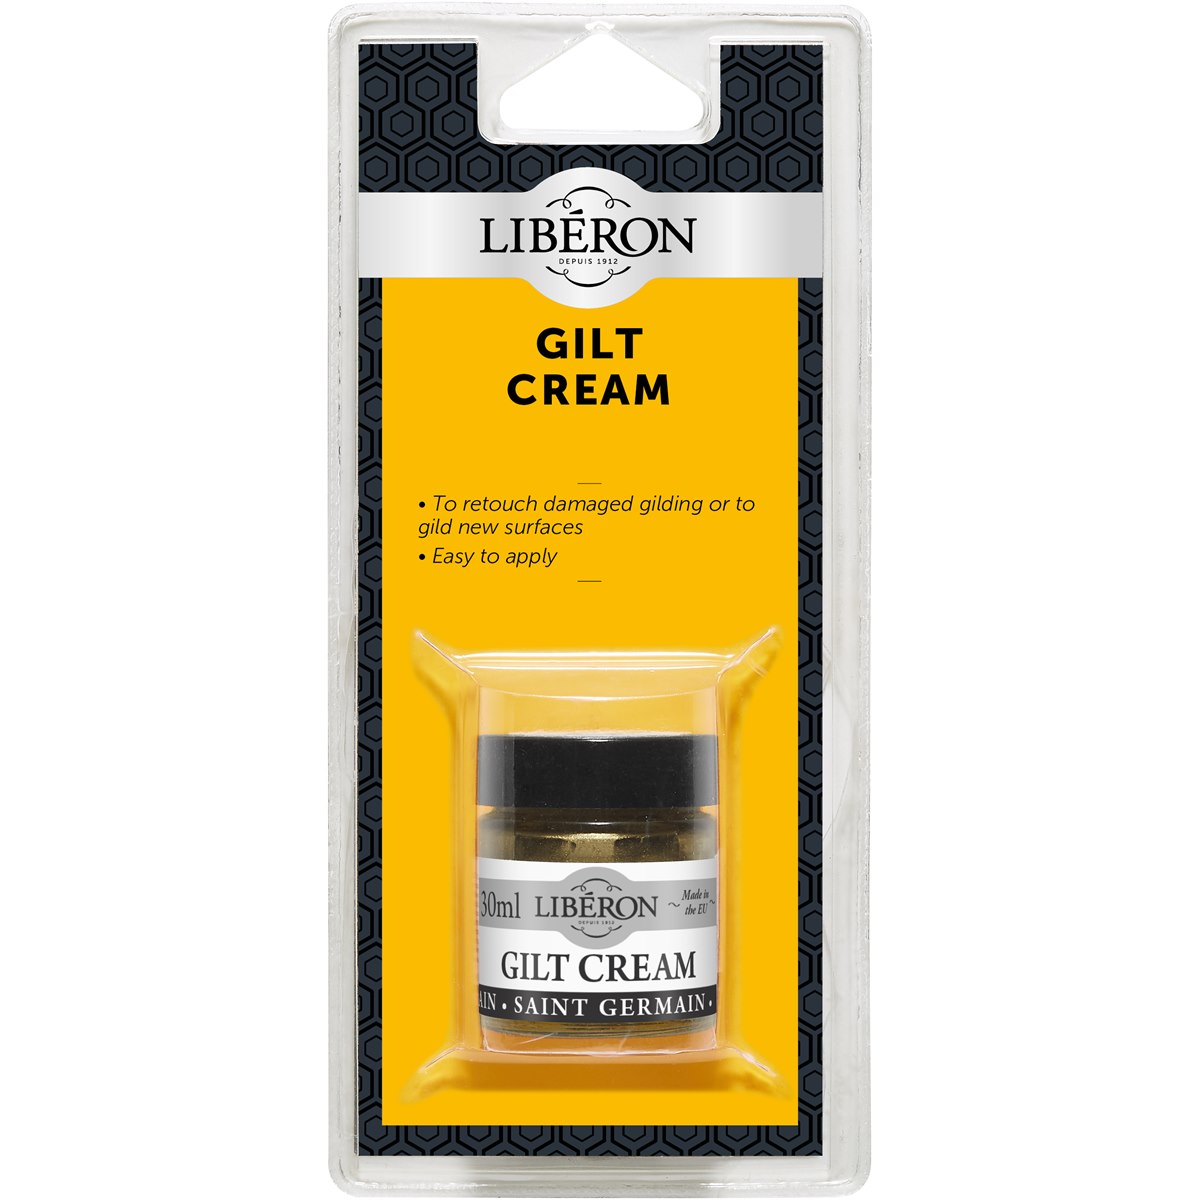 Liberon Gilt Cream St. Germain 30ml